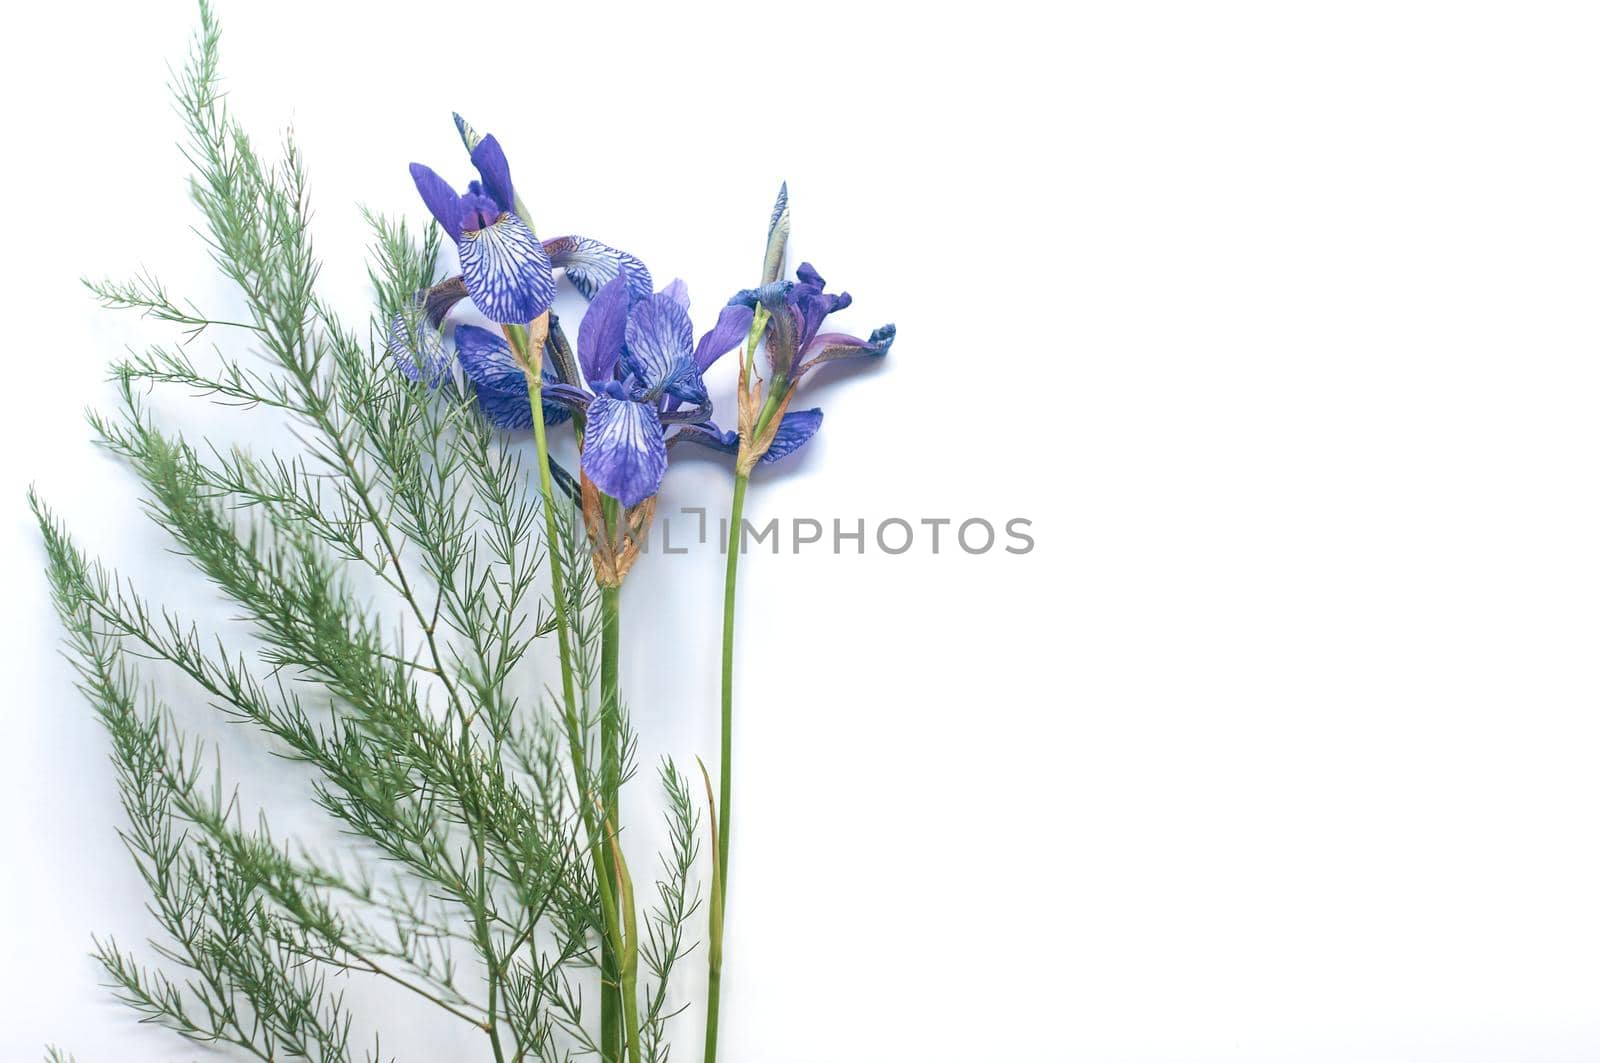 bouquet of wild purple iris flowers on a white paper by ozornina